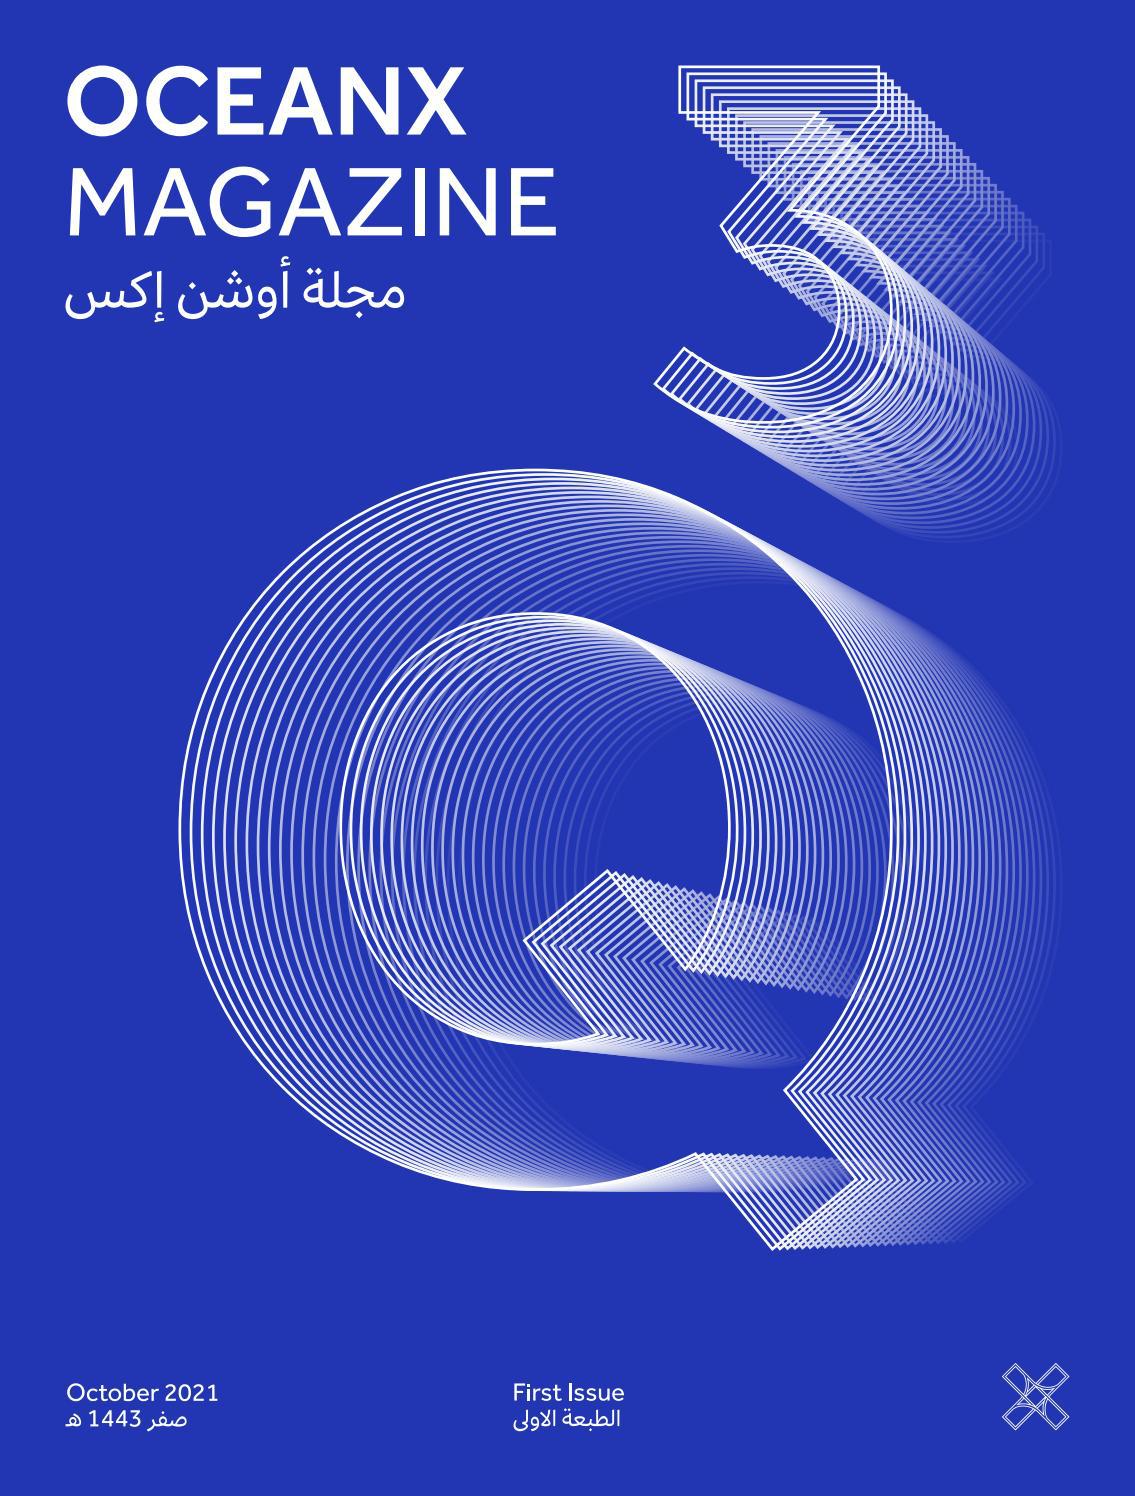 OCEANX MAGAZINE (Q3) مجلة أوشن إكس